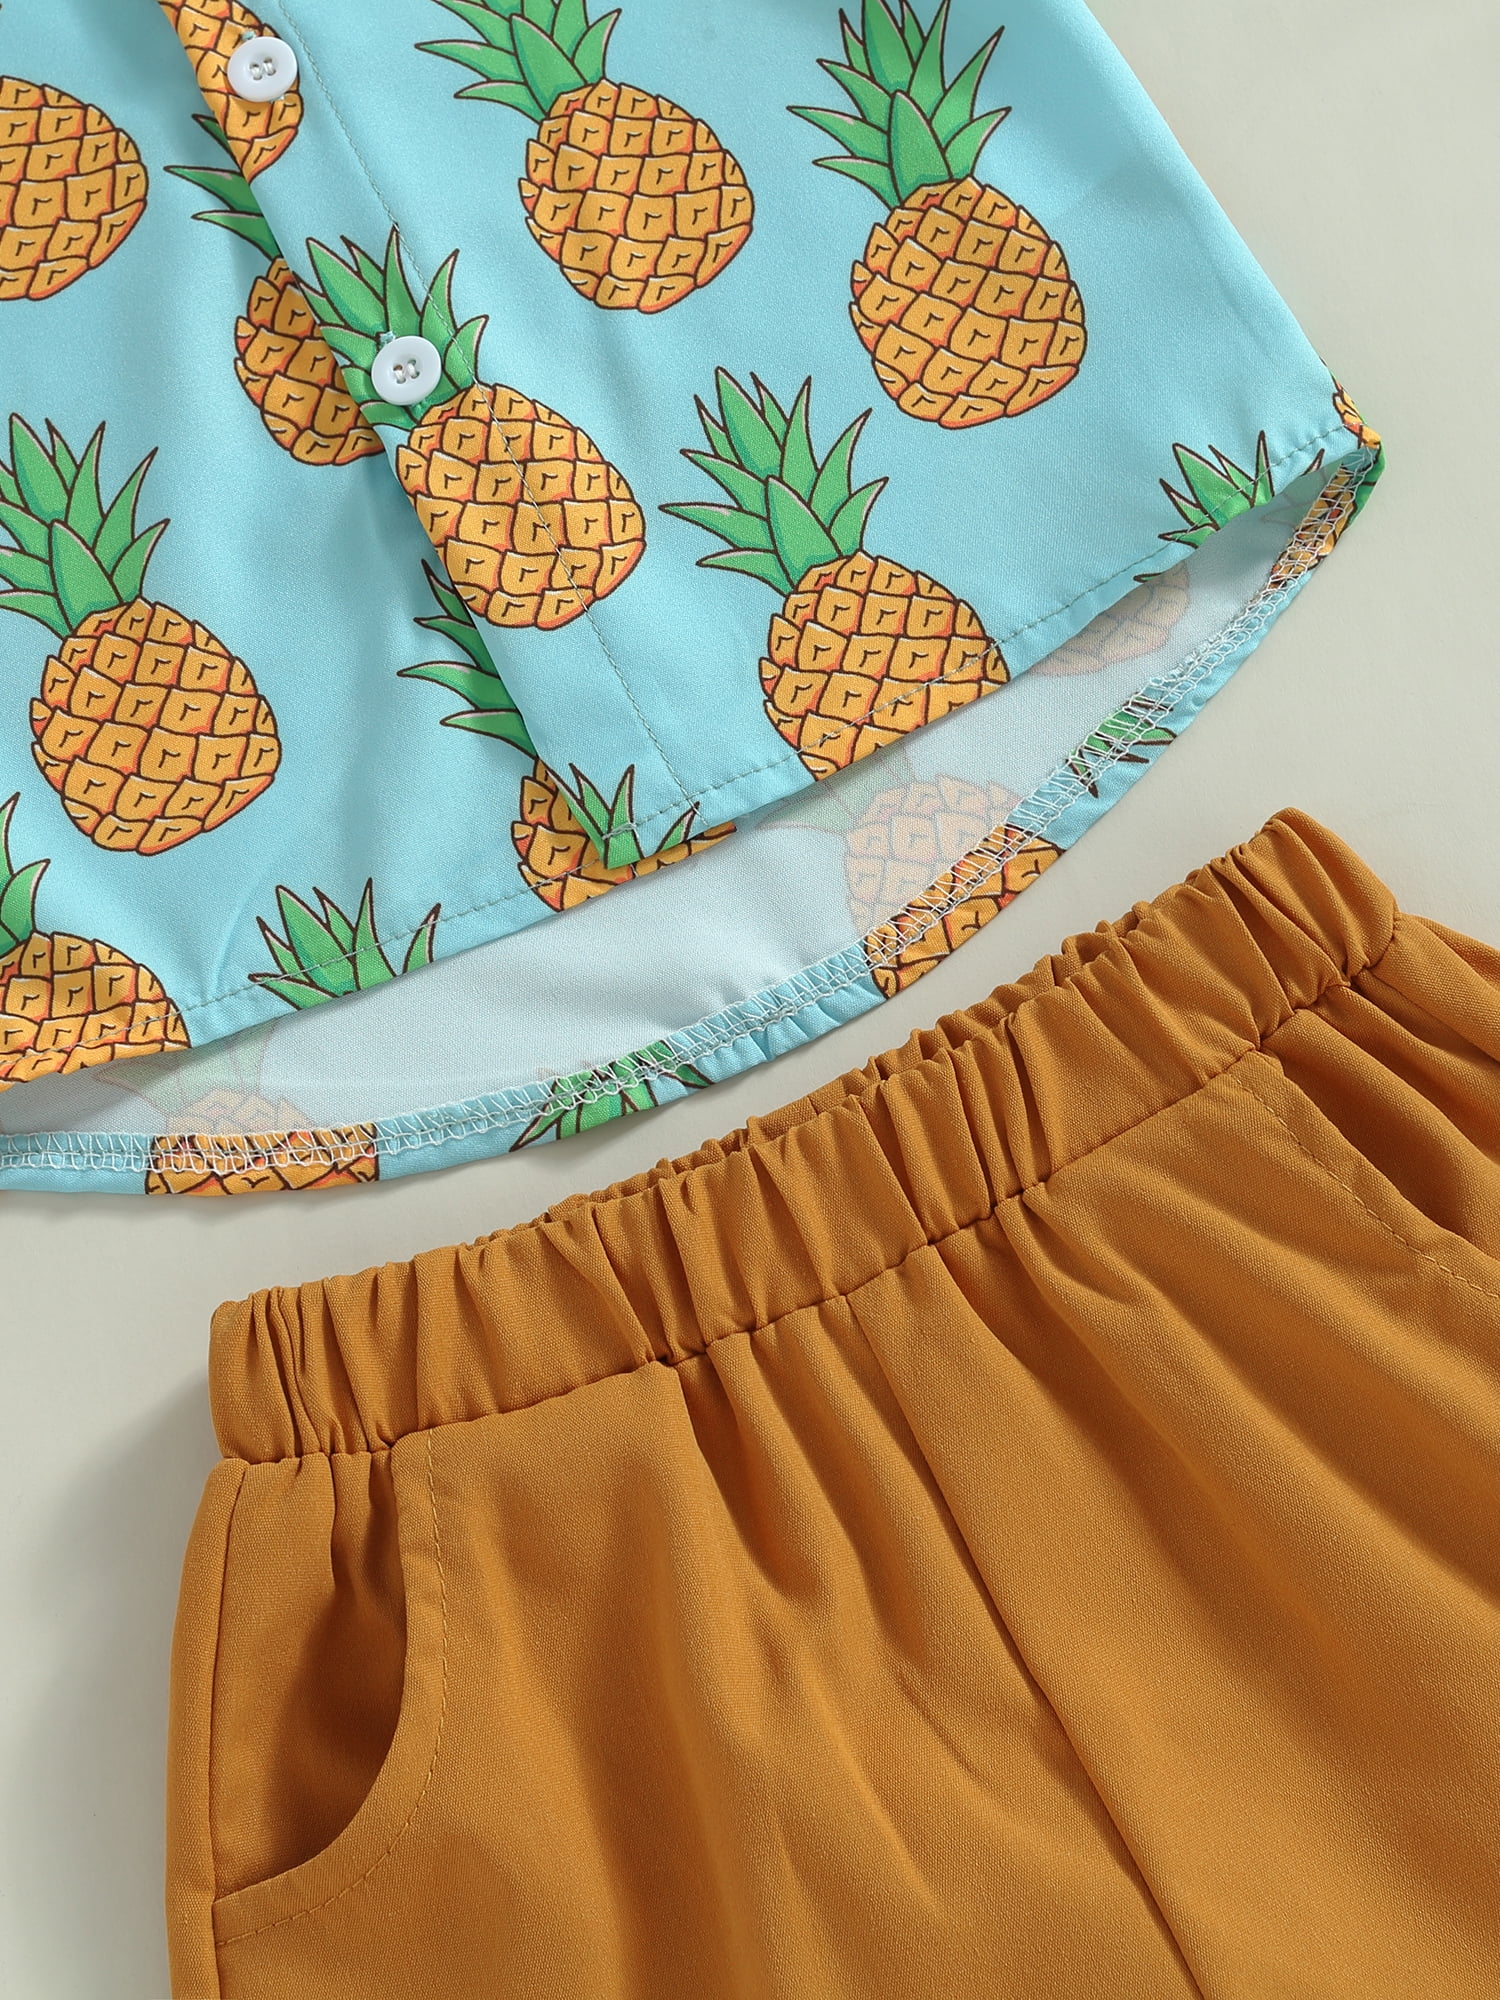 LisenraIn Summer Kids Boys Clothes Sets Plaid Print Short Sleeve T-shirts  Pocket Shorts Beach Outfits